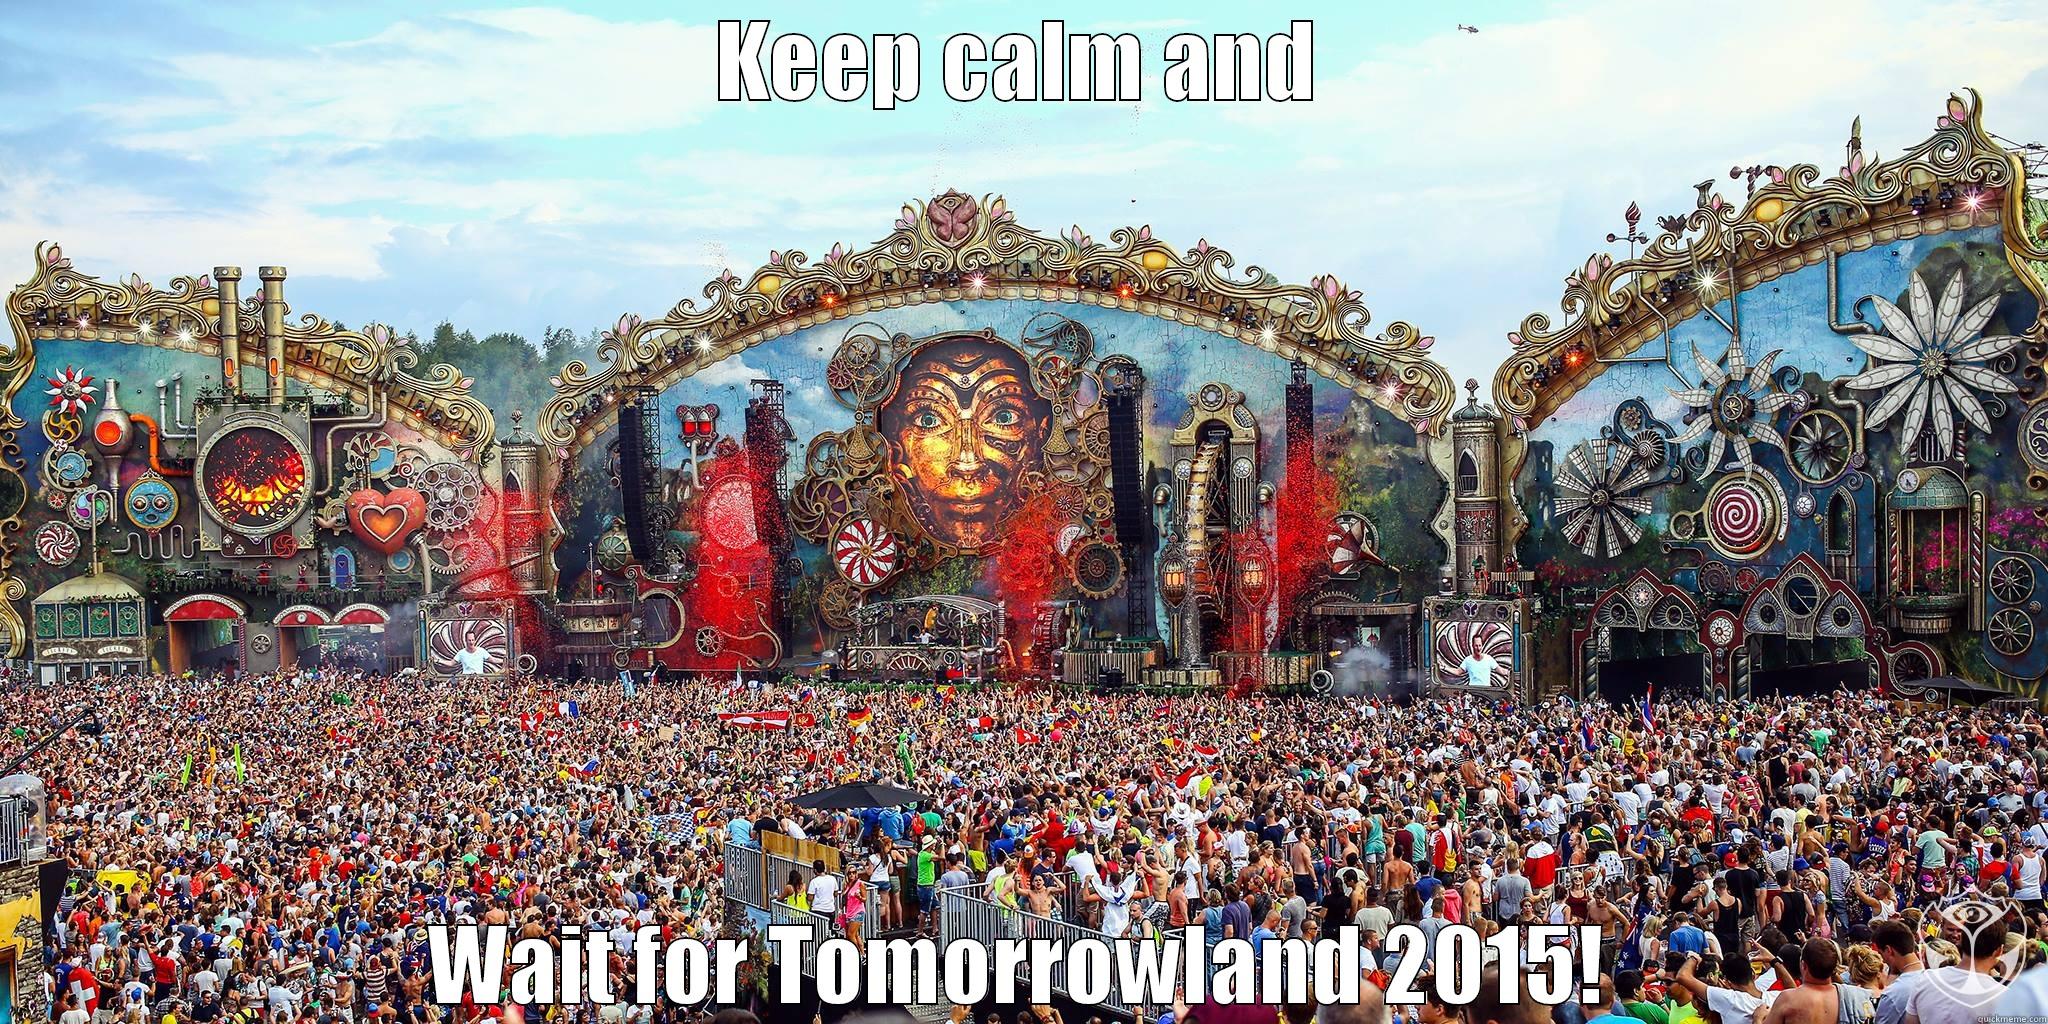 Tomorrowland 2015 - KEEP CALM AND WAIT FOR TOMORROWLAND 2015! Misc